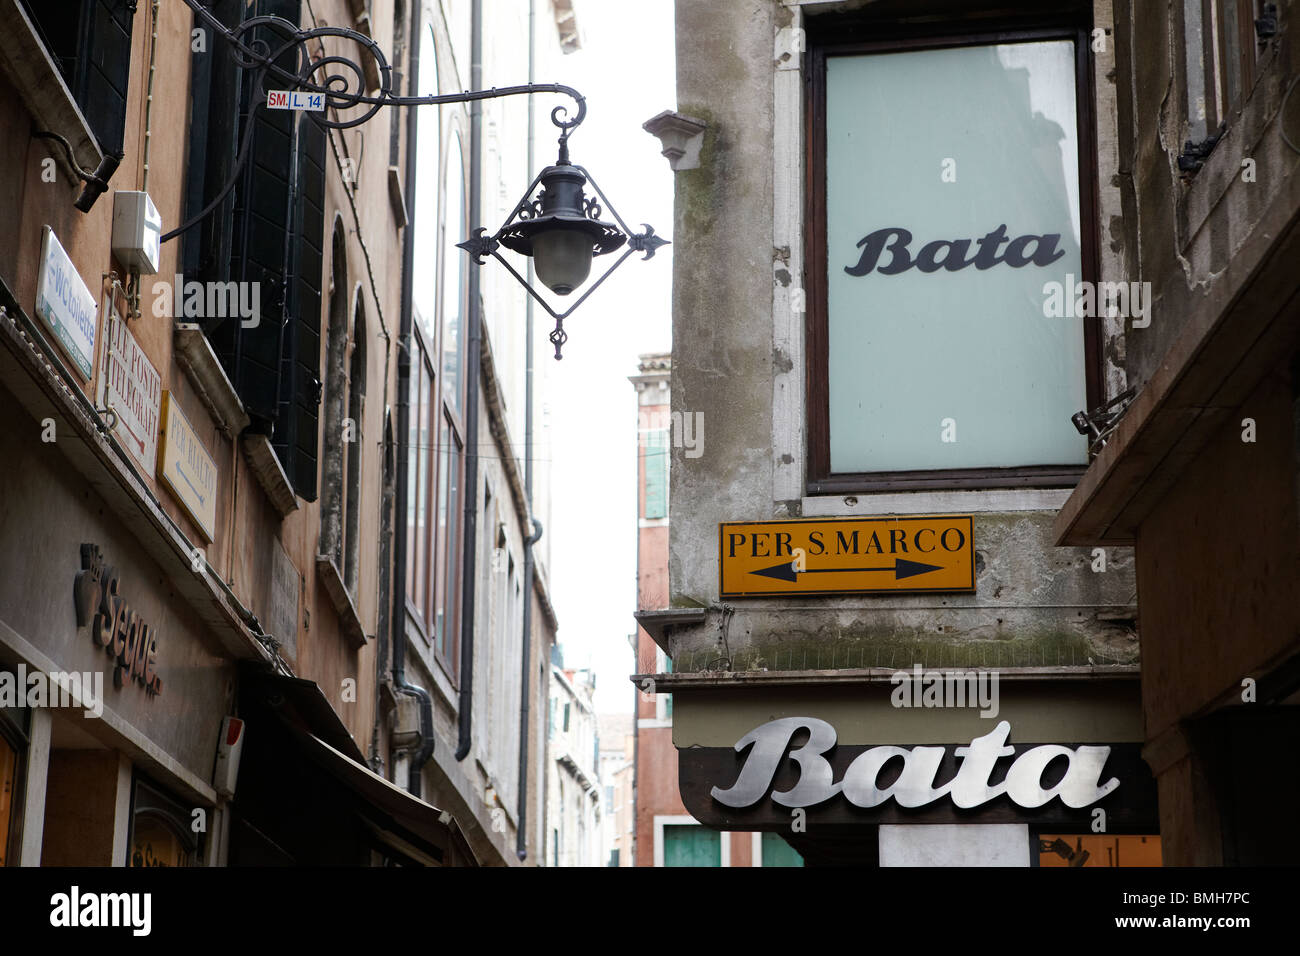 Bata signage in Venice, Italy Stock Photo